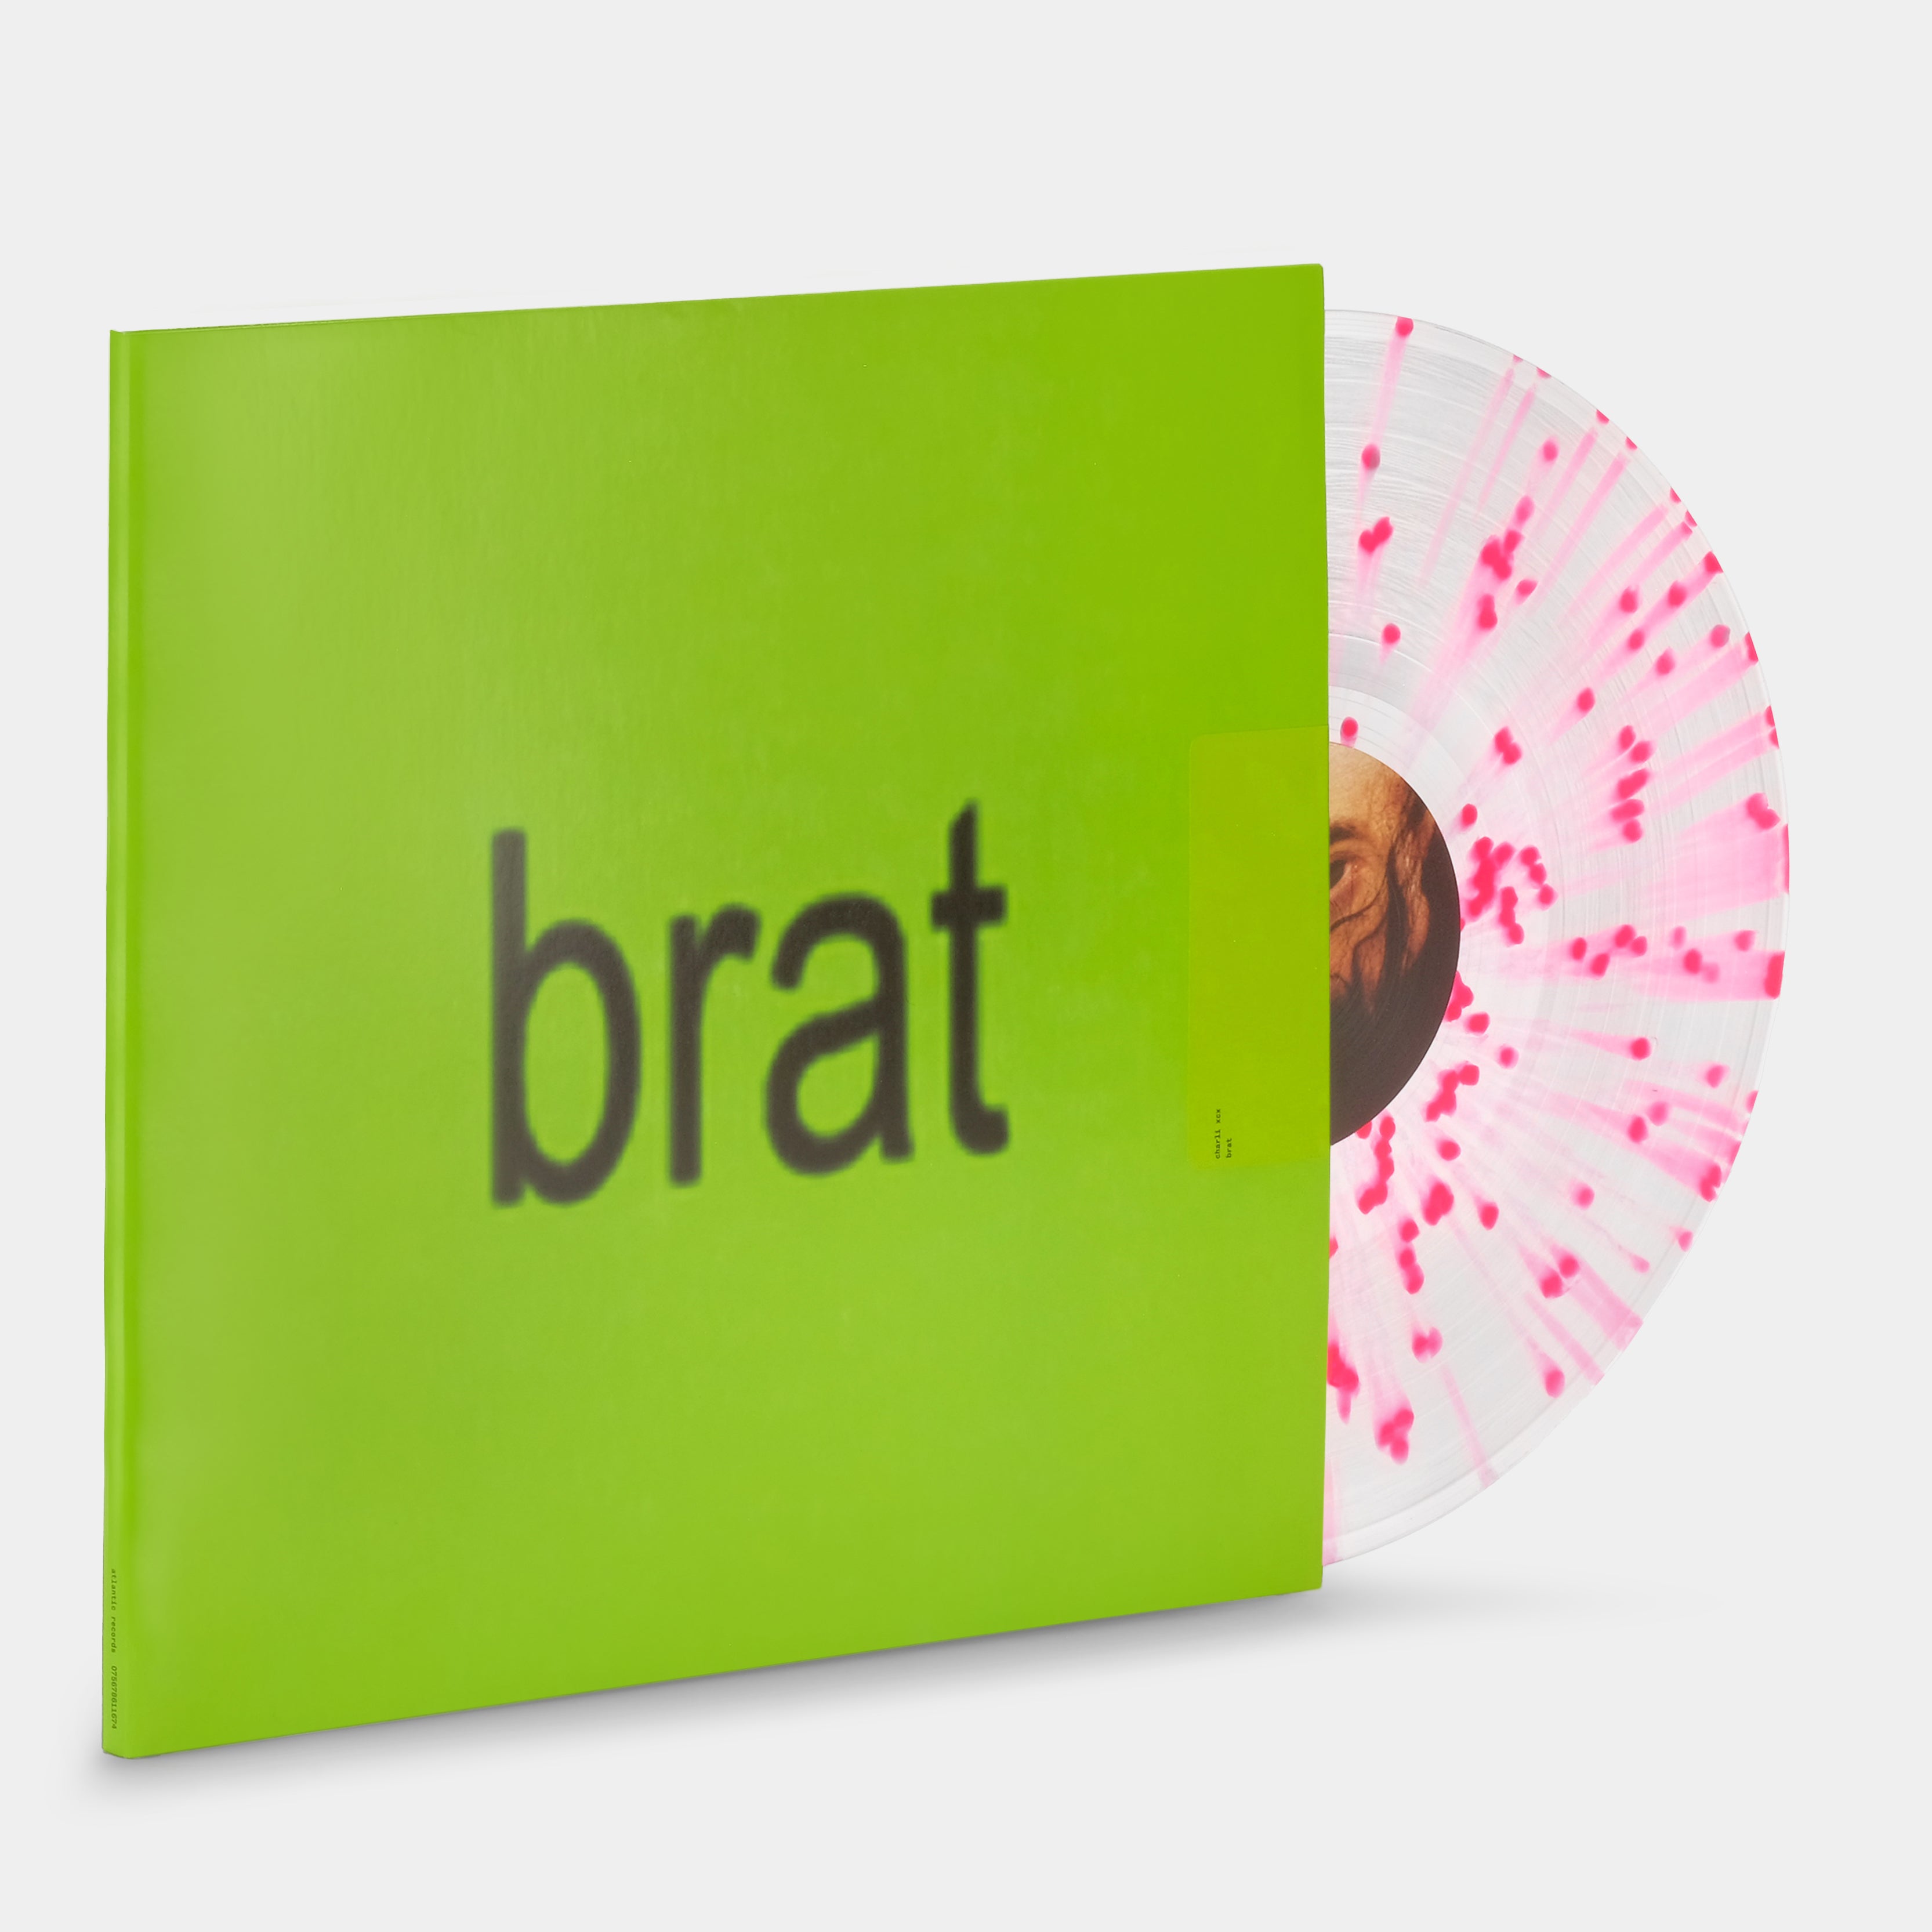 Charli XCX - Brat LP Clear With Pink Splatter Vinyl Record